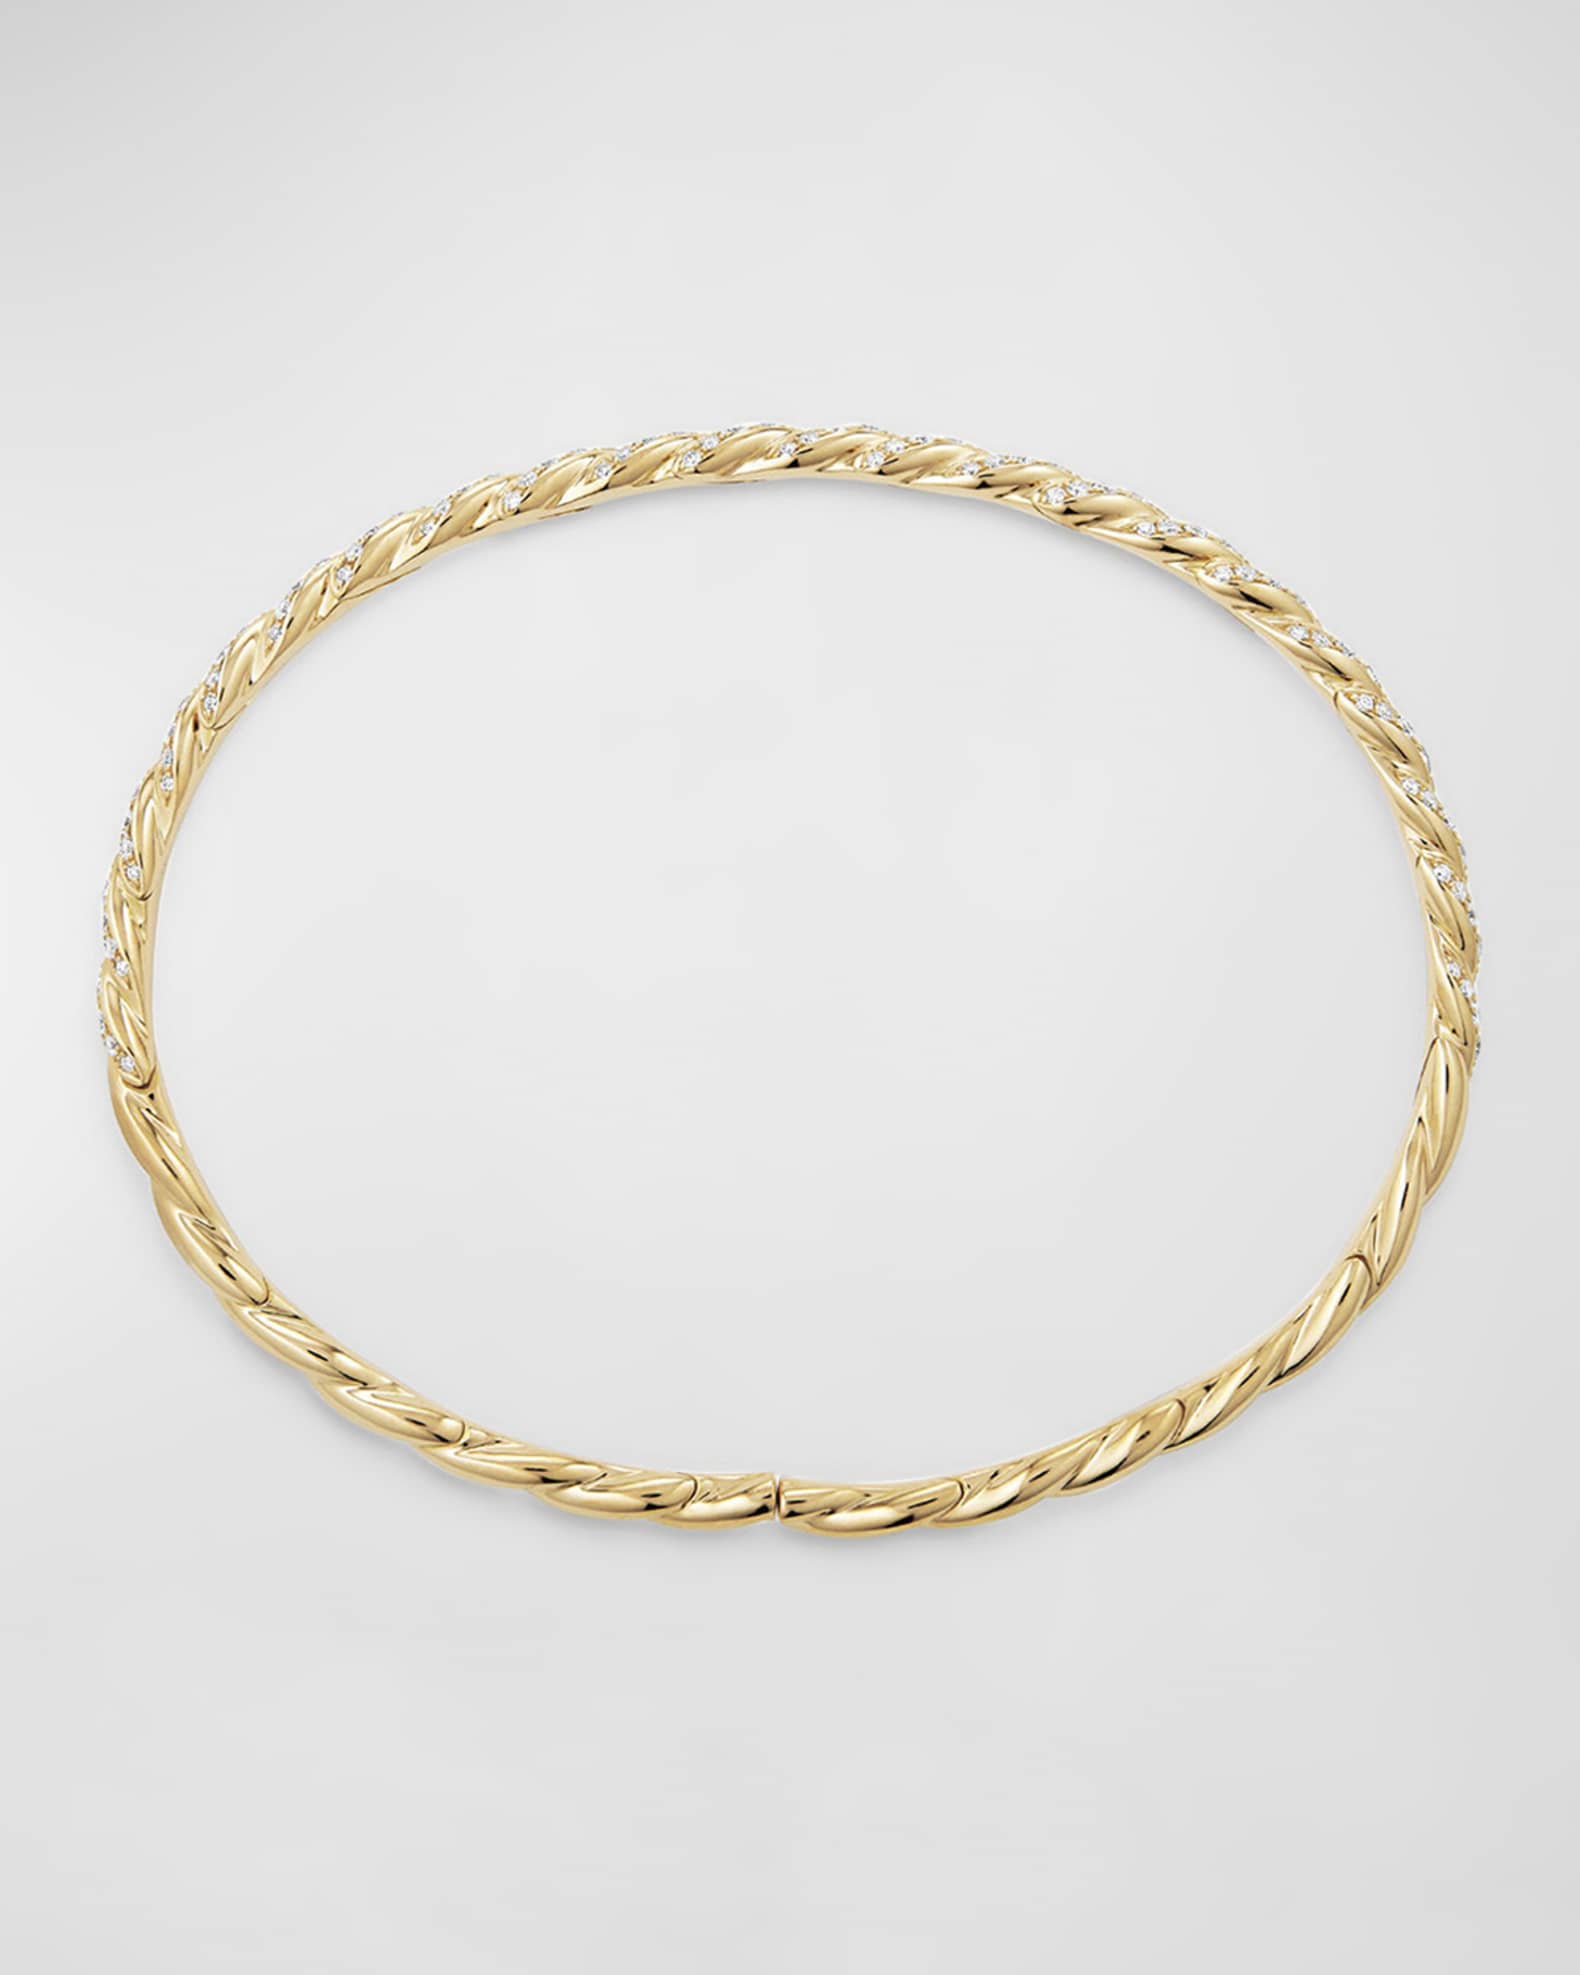 David Yurman 3.4mm Paveflex 18K Gold Bracelet with Diamonds | Neiman Marcus